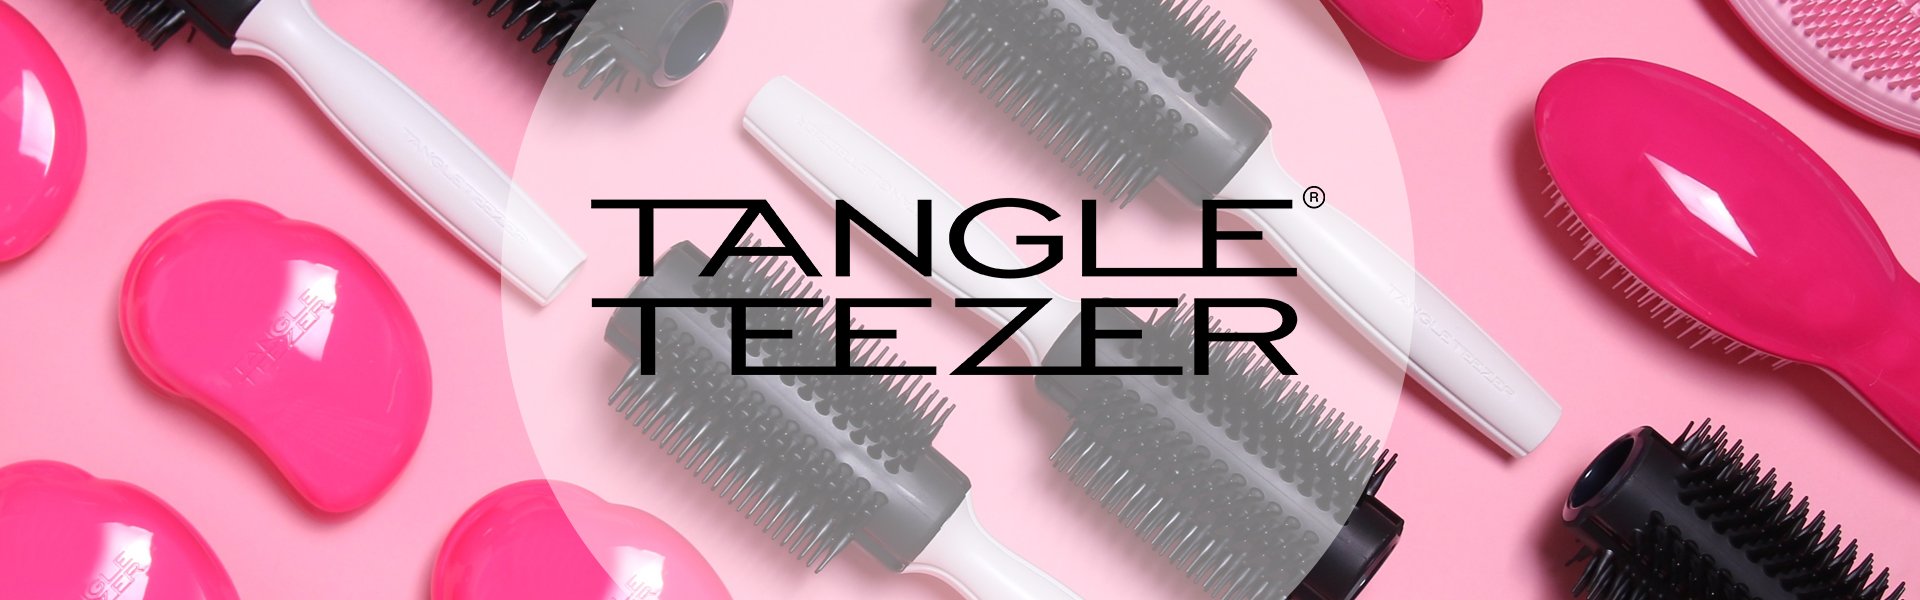 Щетка для волос Tangle Angel Angel 2.0, Soft Touch Pink 